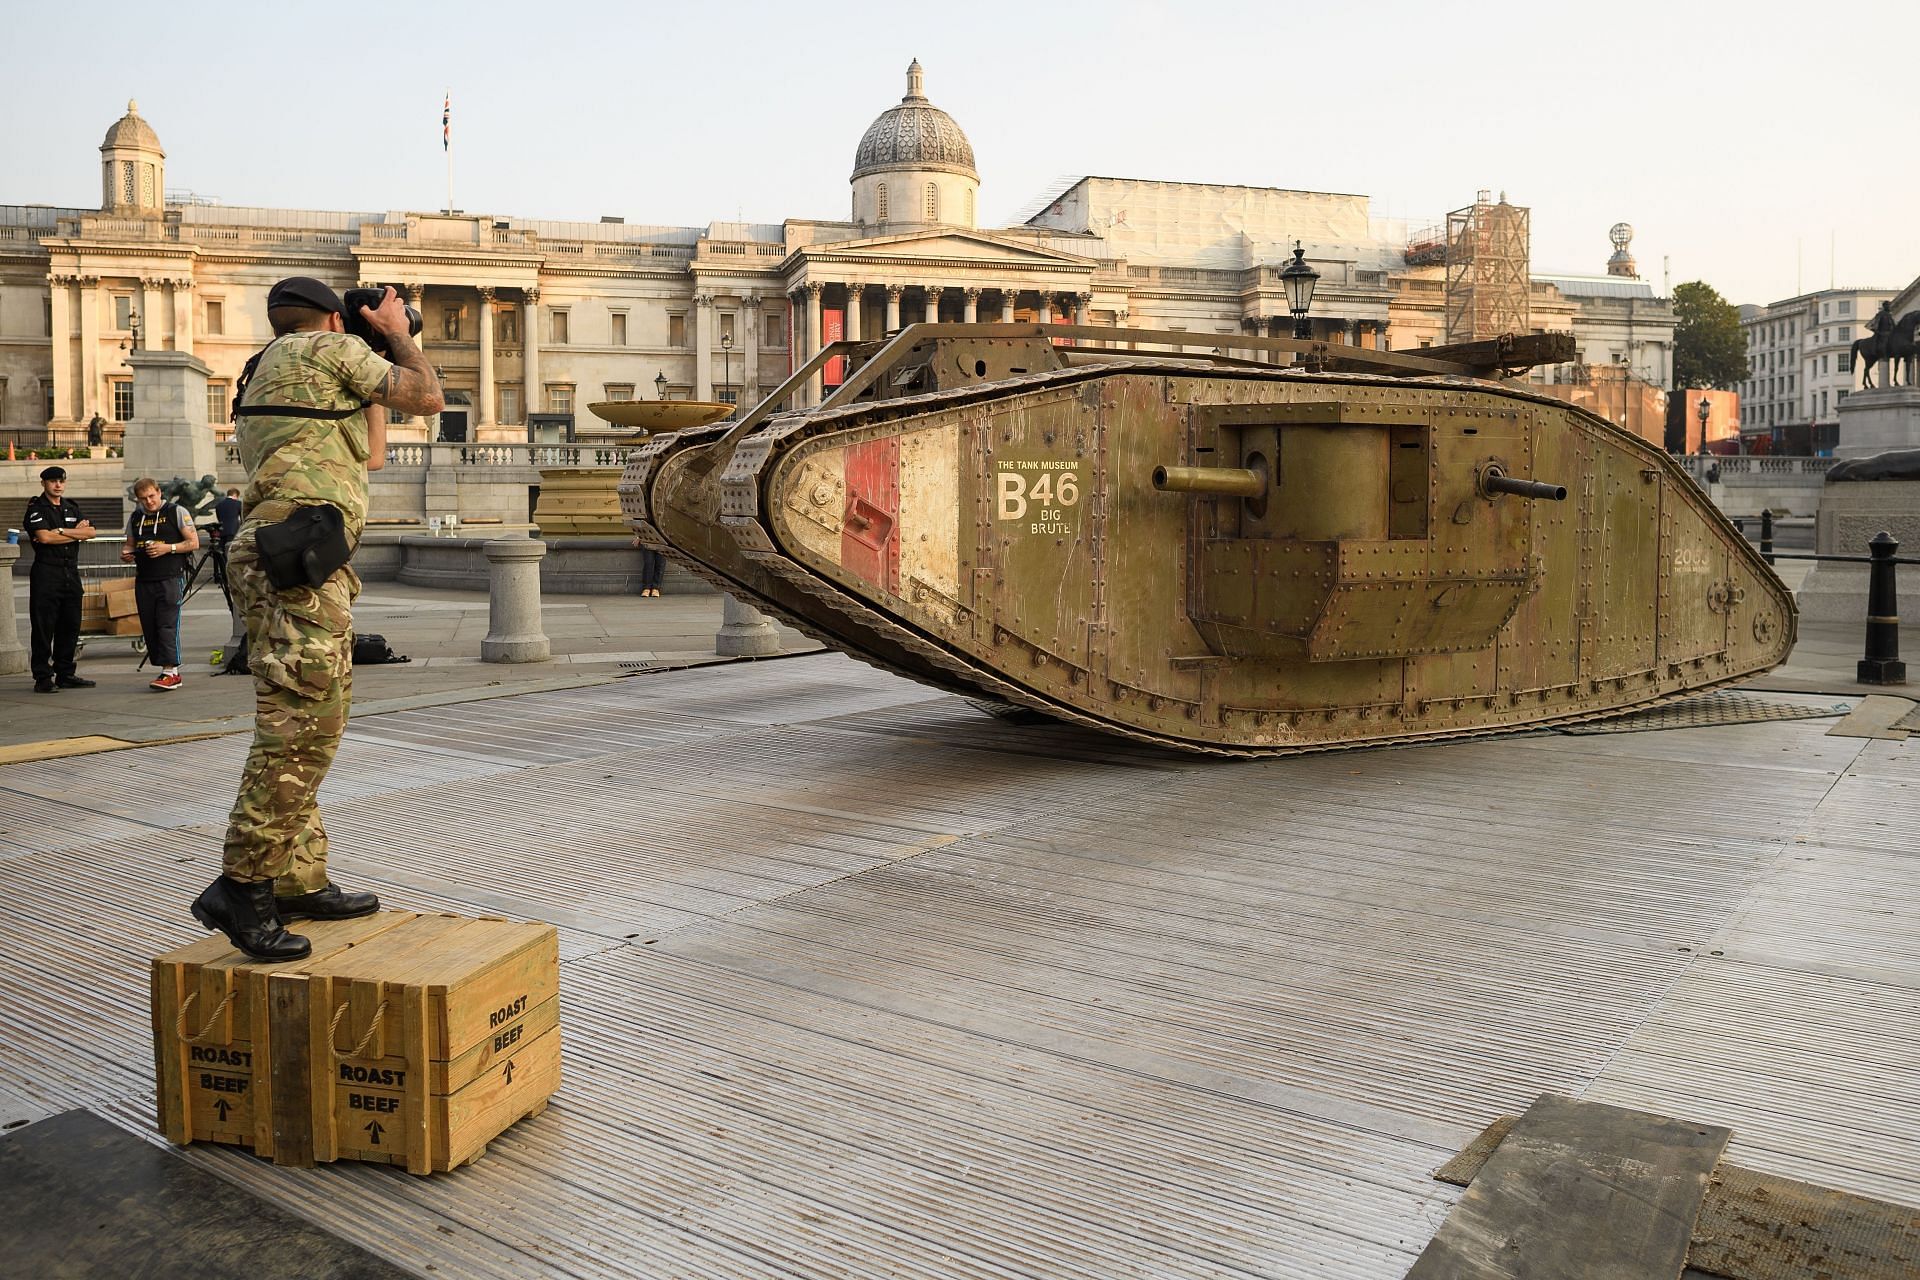 WW1 tanks in Trafalgar Square, London, to mark their centenary (Image via Getty)